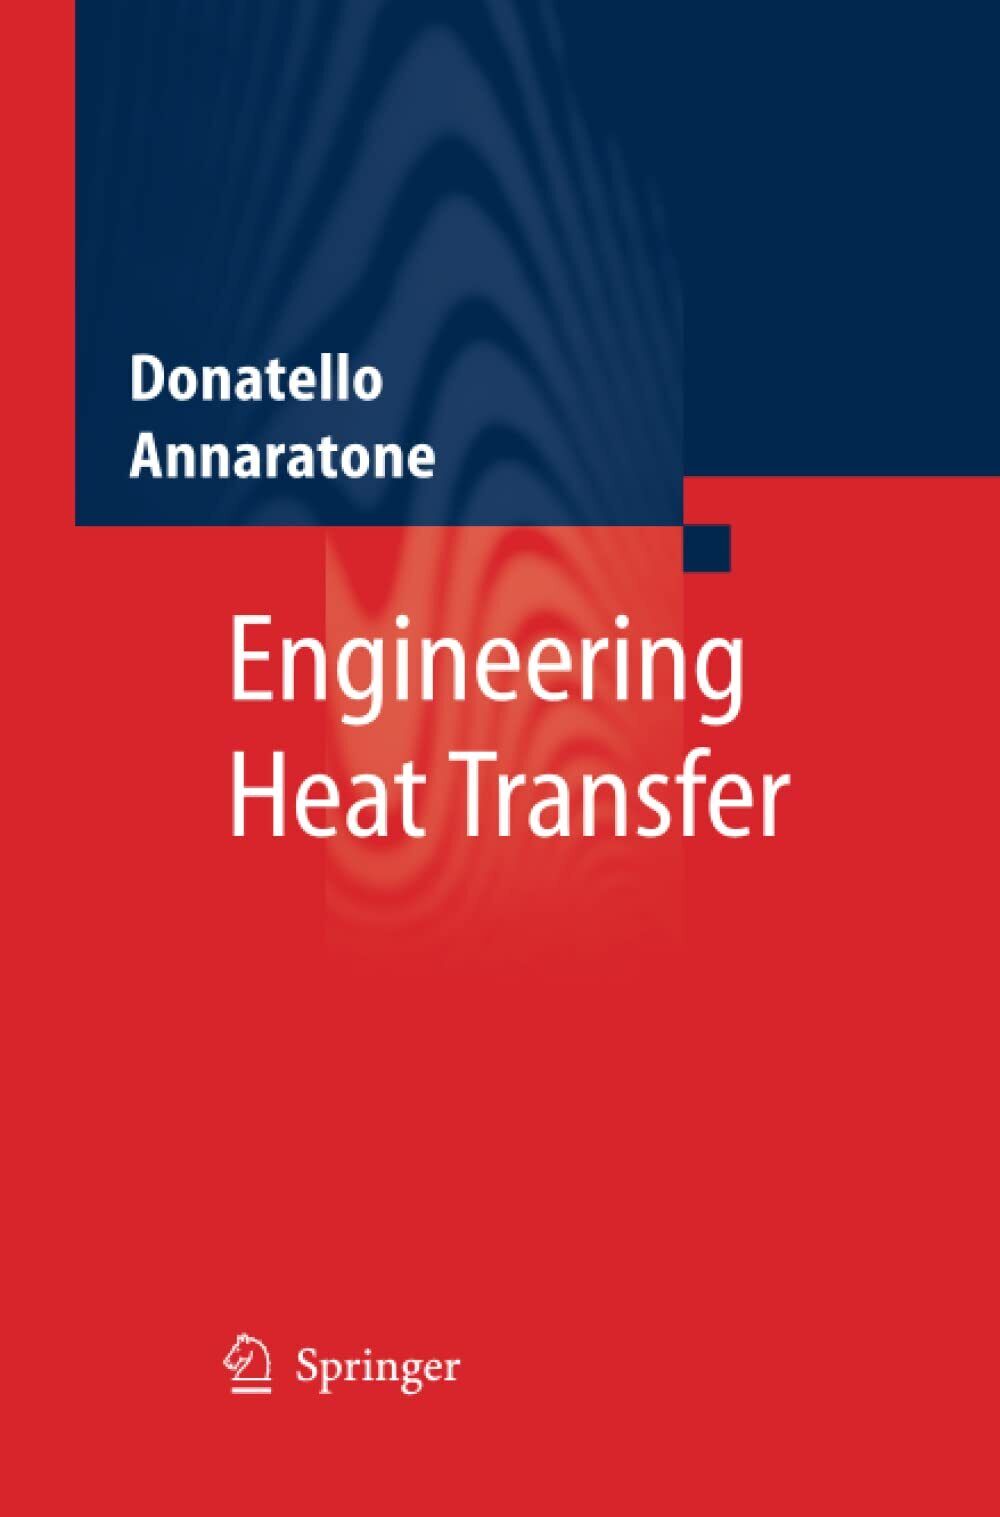 Engineering Heat Transfer - Donatello Annaratone - Springer, 2014